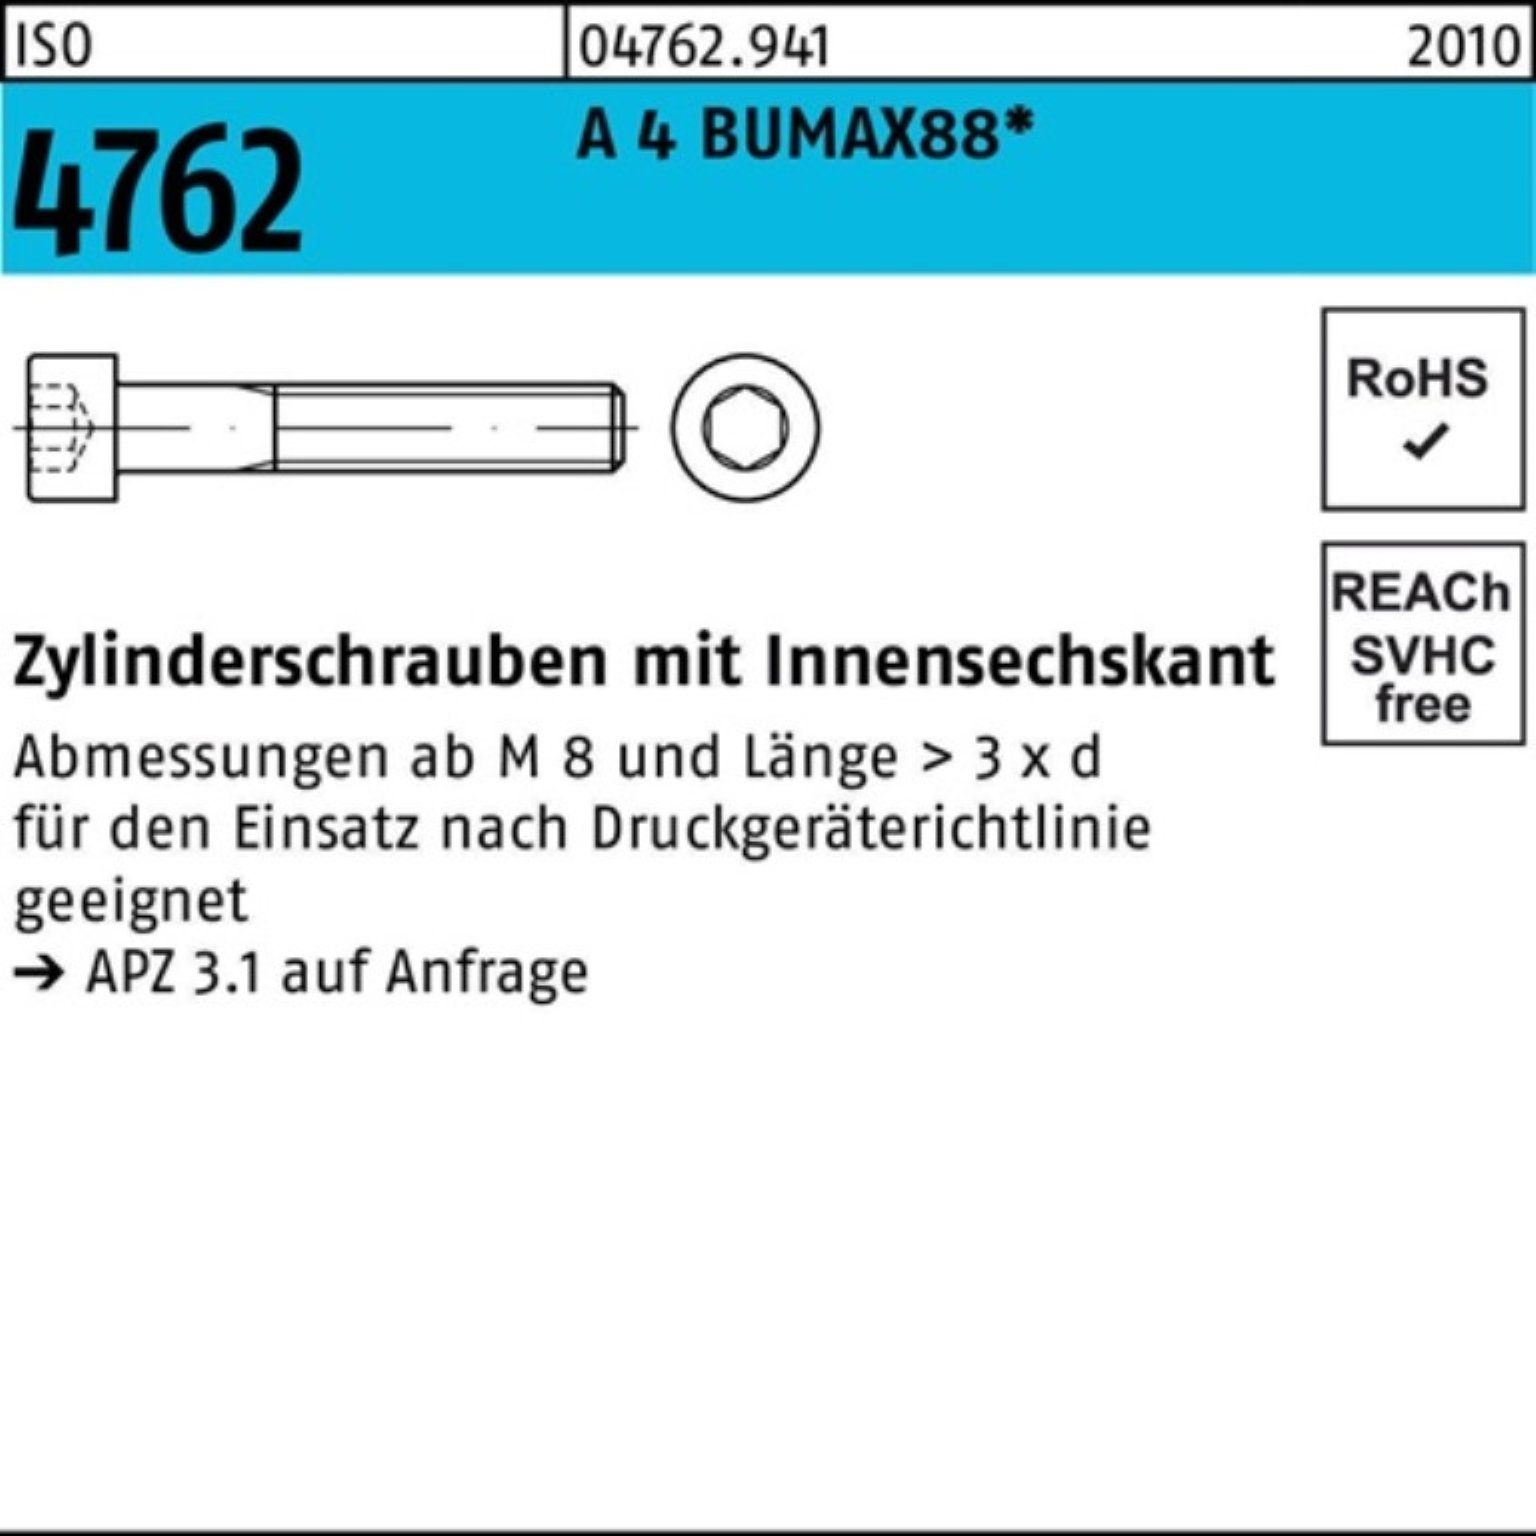 Bufab Zylinderschraube 100er Pack Zylinderschraube ISO 4762 Innen-6kt M10x 30 A 4 BUMAX88 50